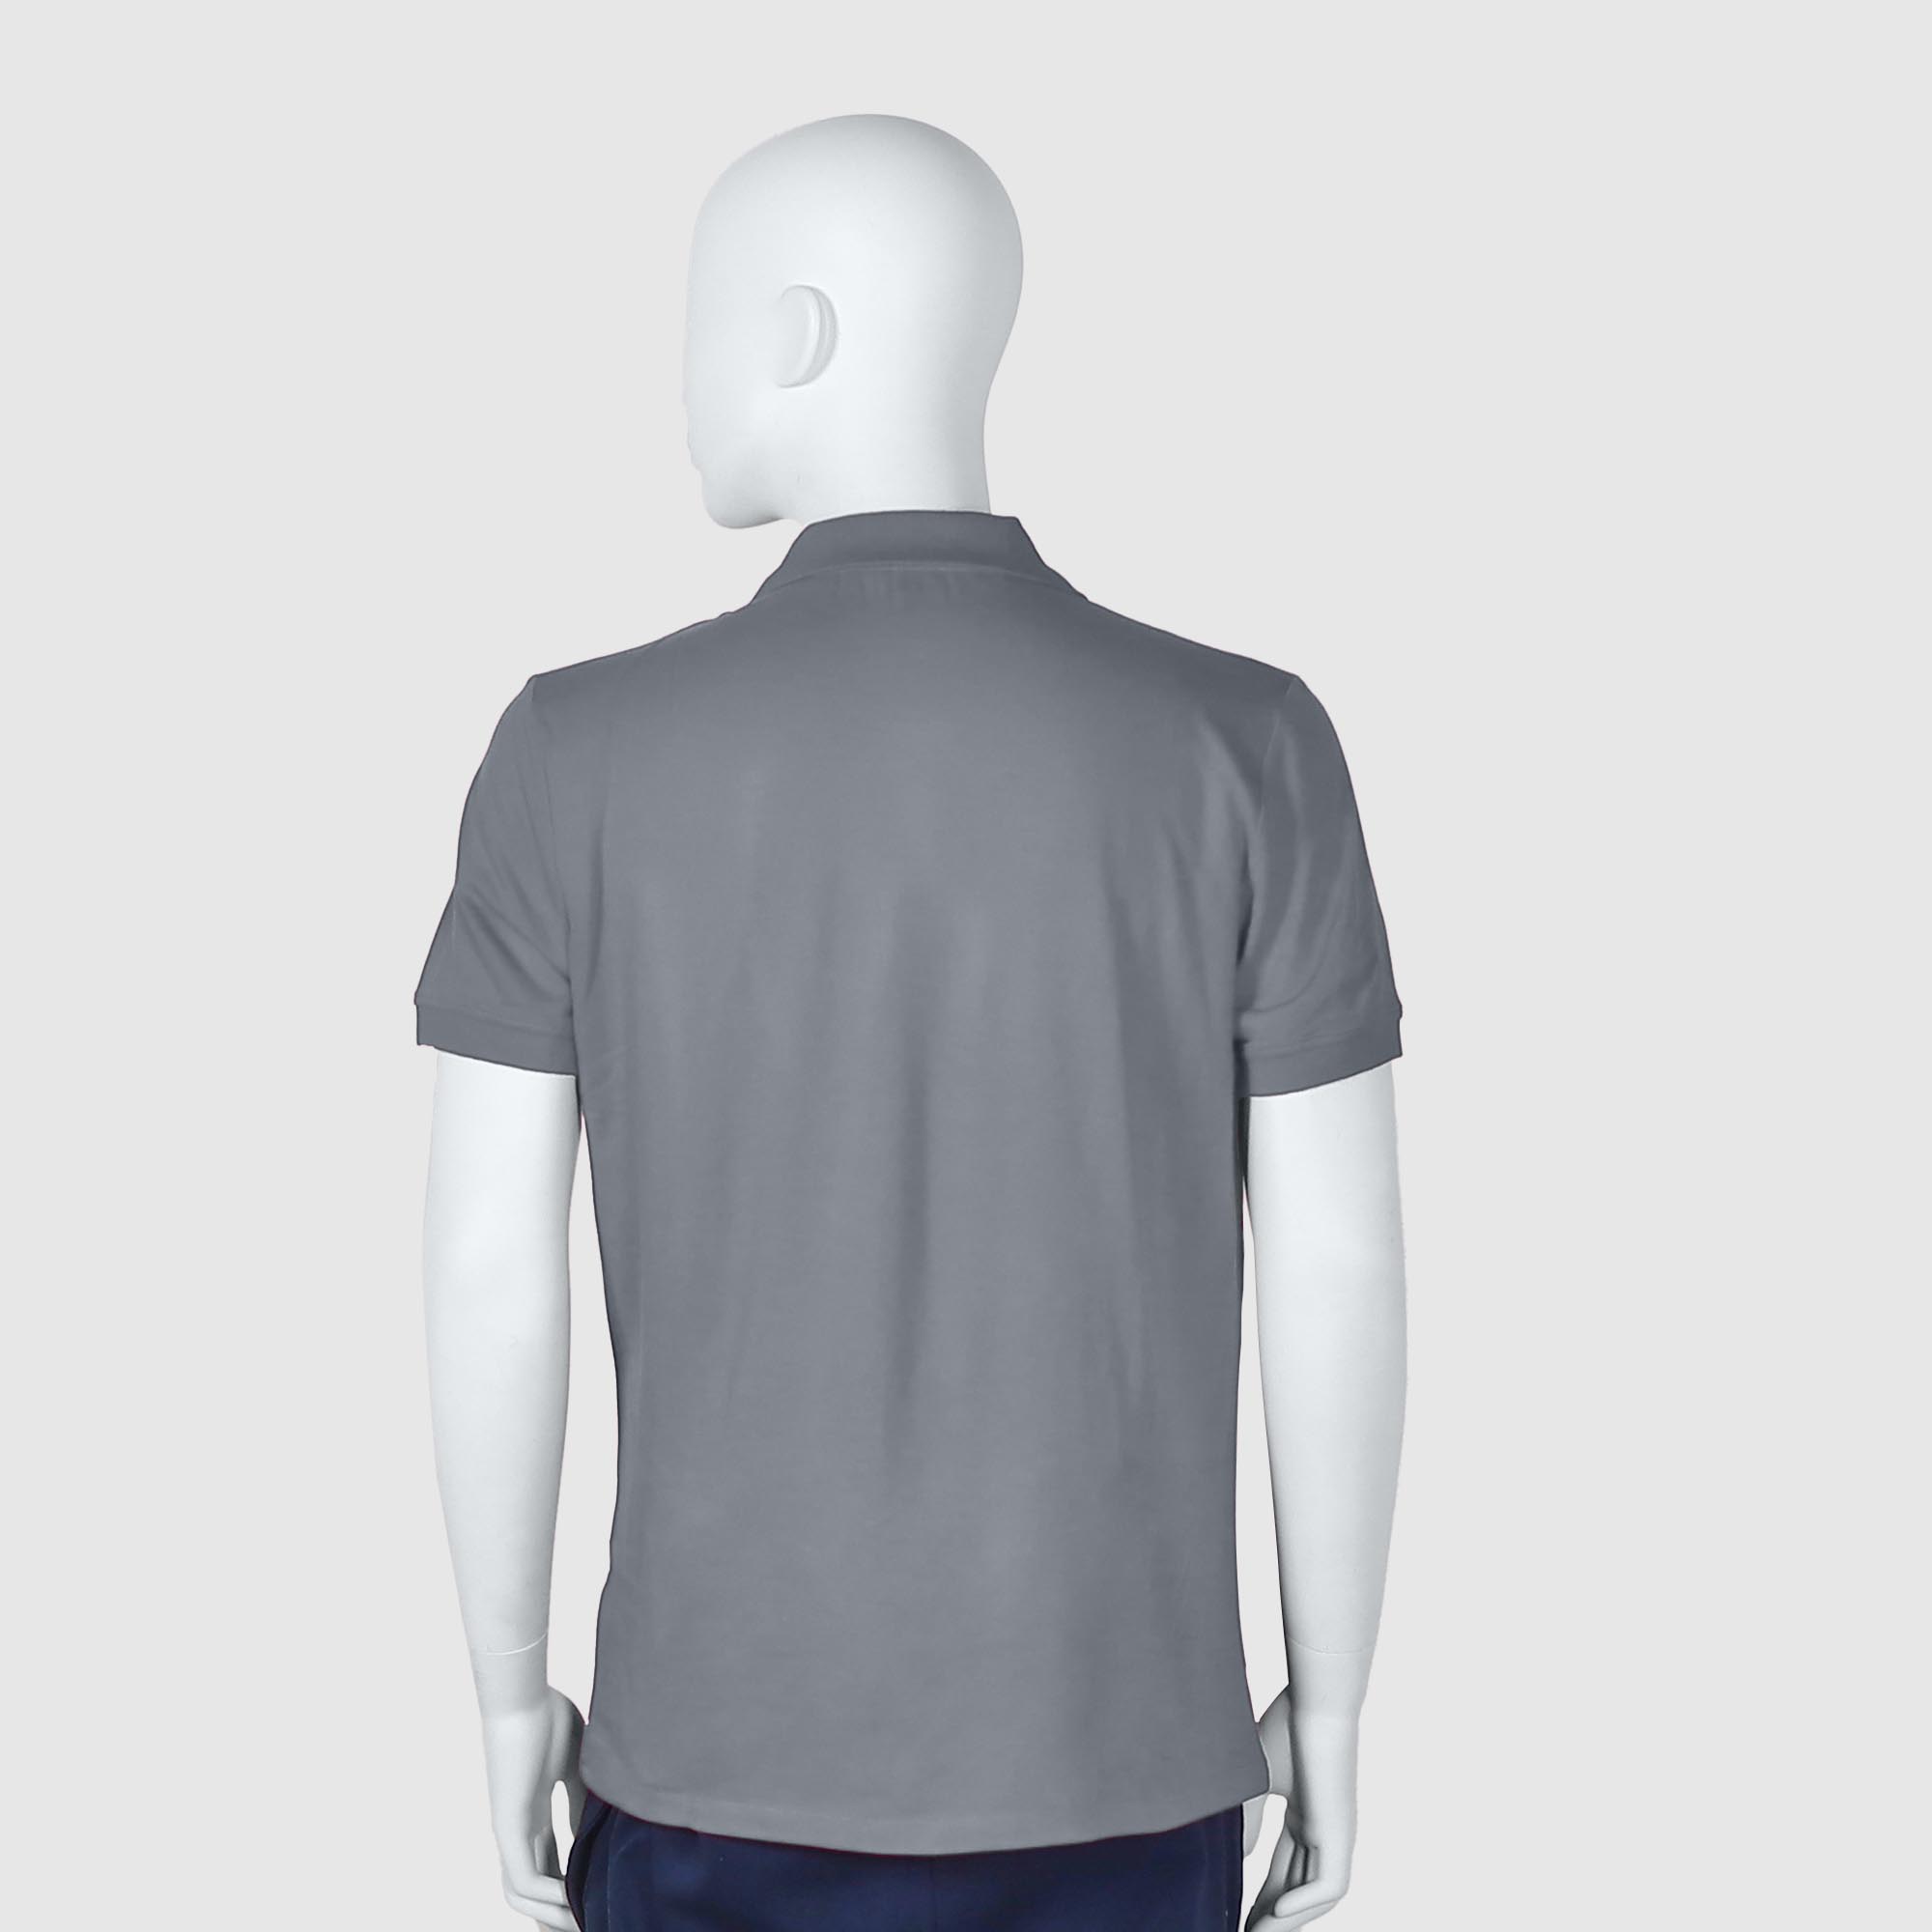 Мужская футболка-поло Diva Teks серая (DTD-11), цвет серый, размер 44-46 - фото 2